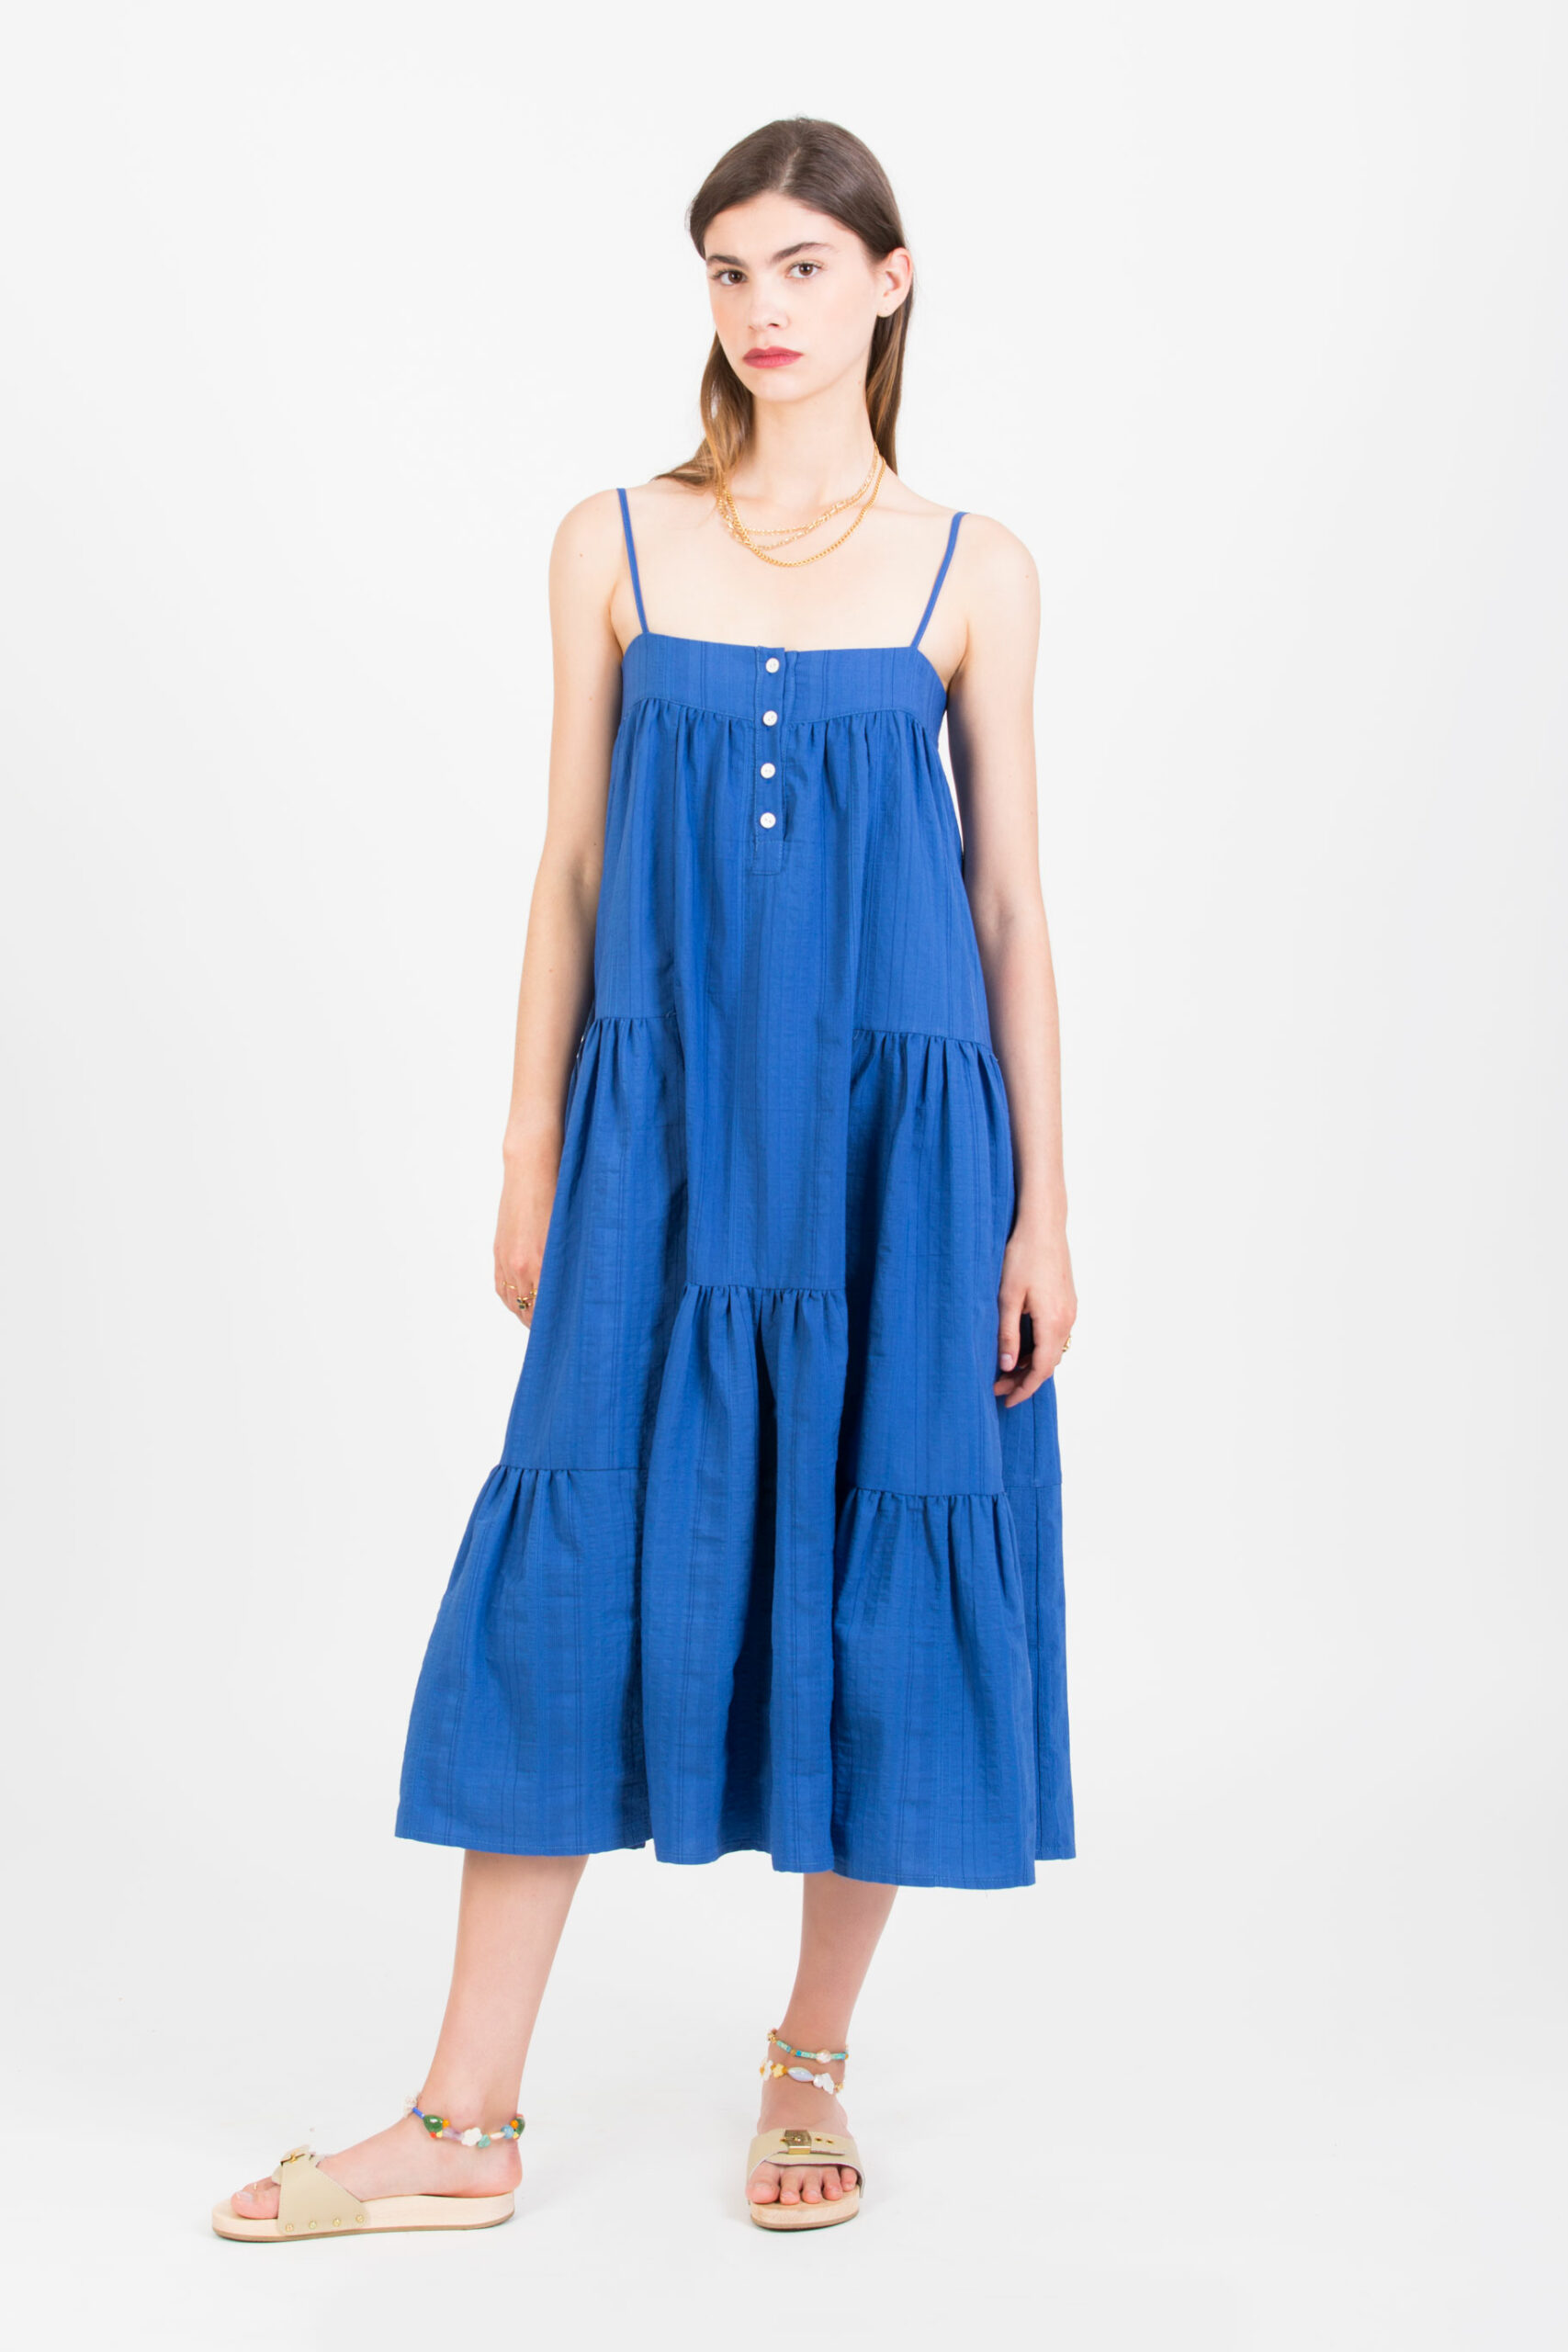 Polly Blue Dress - Shop - Uniforme